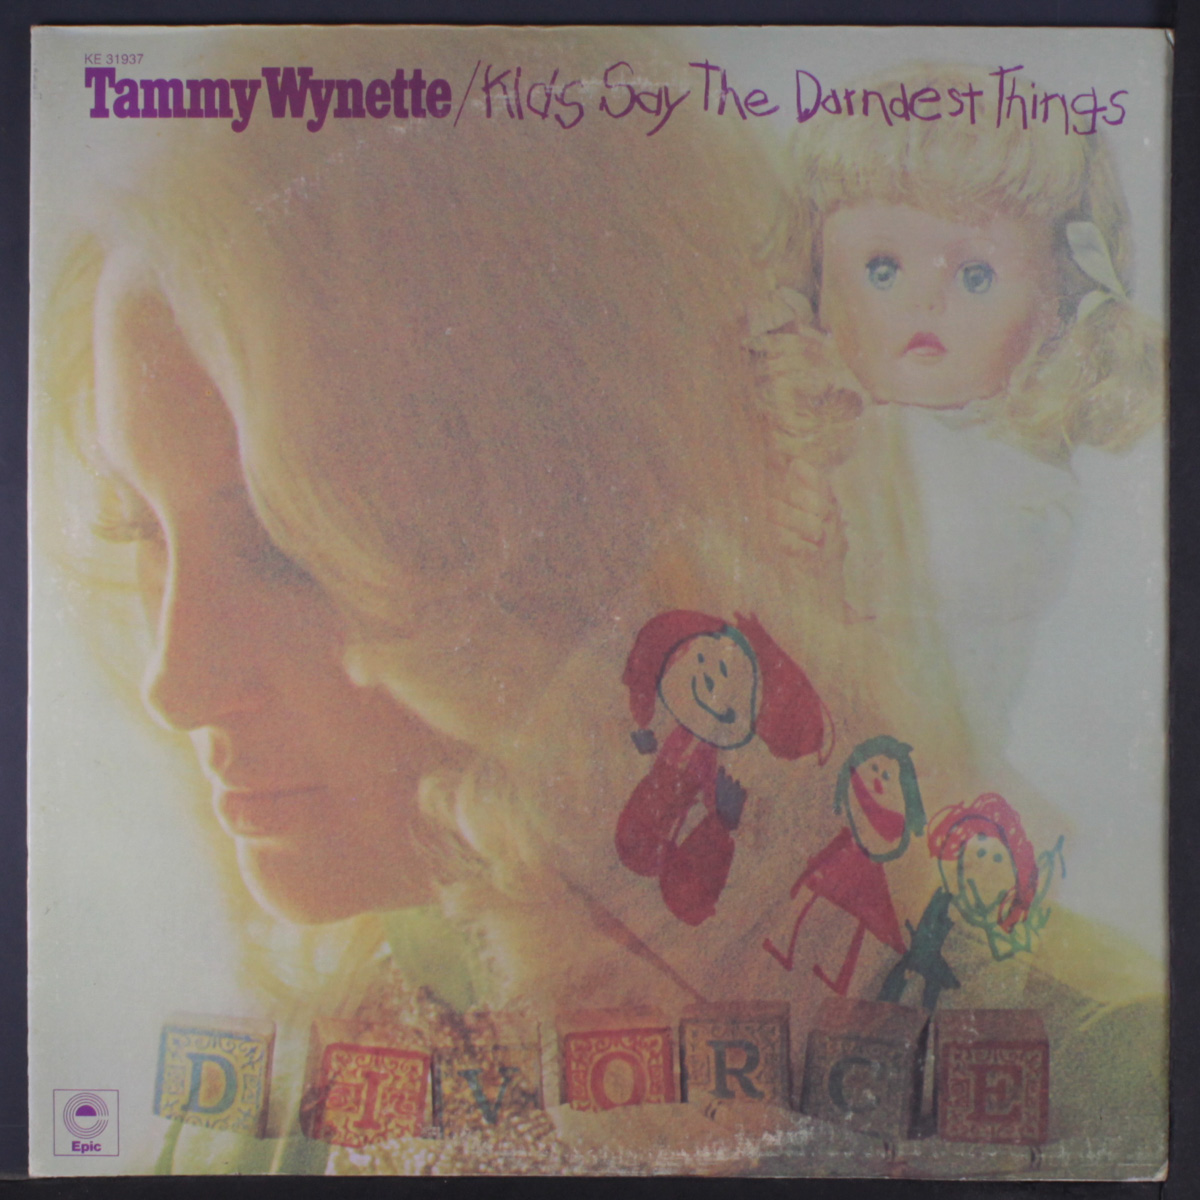 #50YearsAgoToday the #TammyWynette #album #KidsSayTheDarndestThings hit #1 on the #CashBox #CountryAlbum #Chart #50YearsAgo #July1973 #Tammy #CountryMusicHallOfFame #FirstLadyOfCountryMusic #FirstLadyOfCountry #EpicRecords